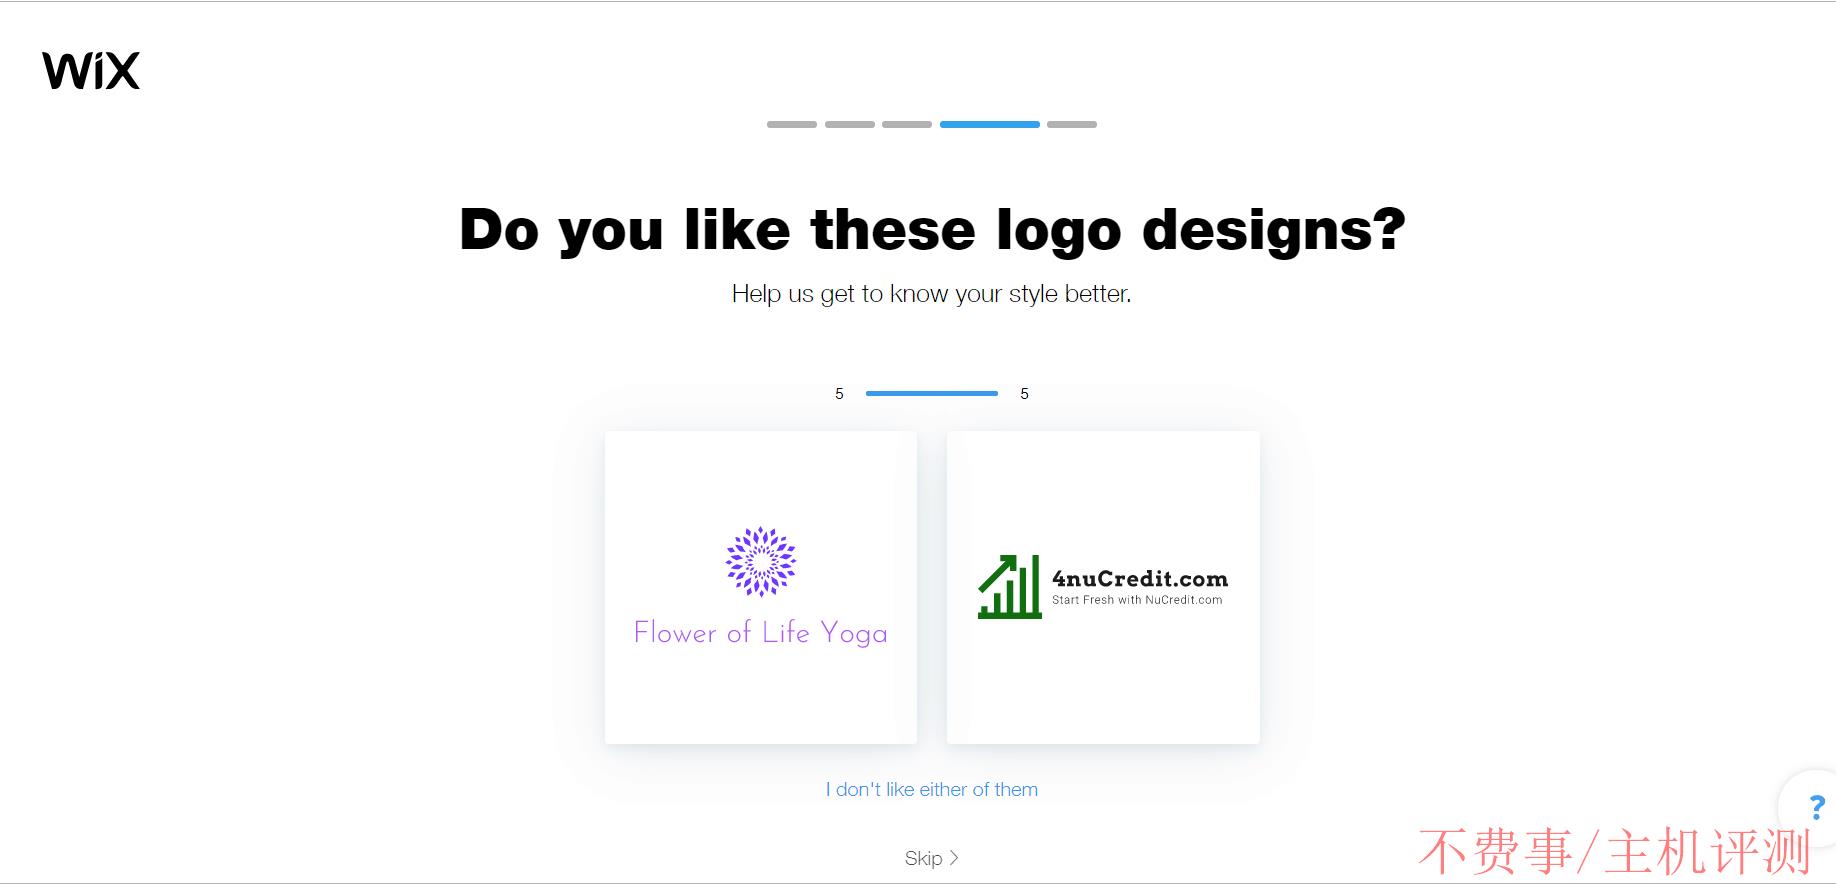 Wix Logo Maker screenshot - Logo styles